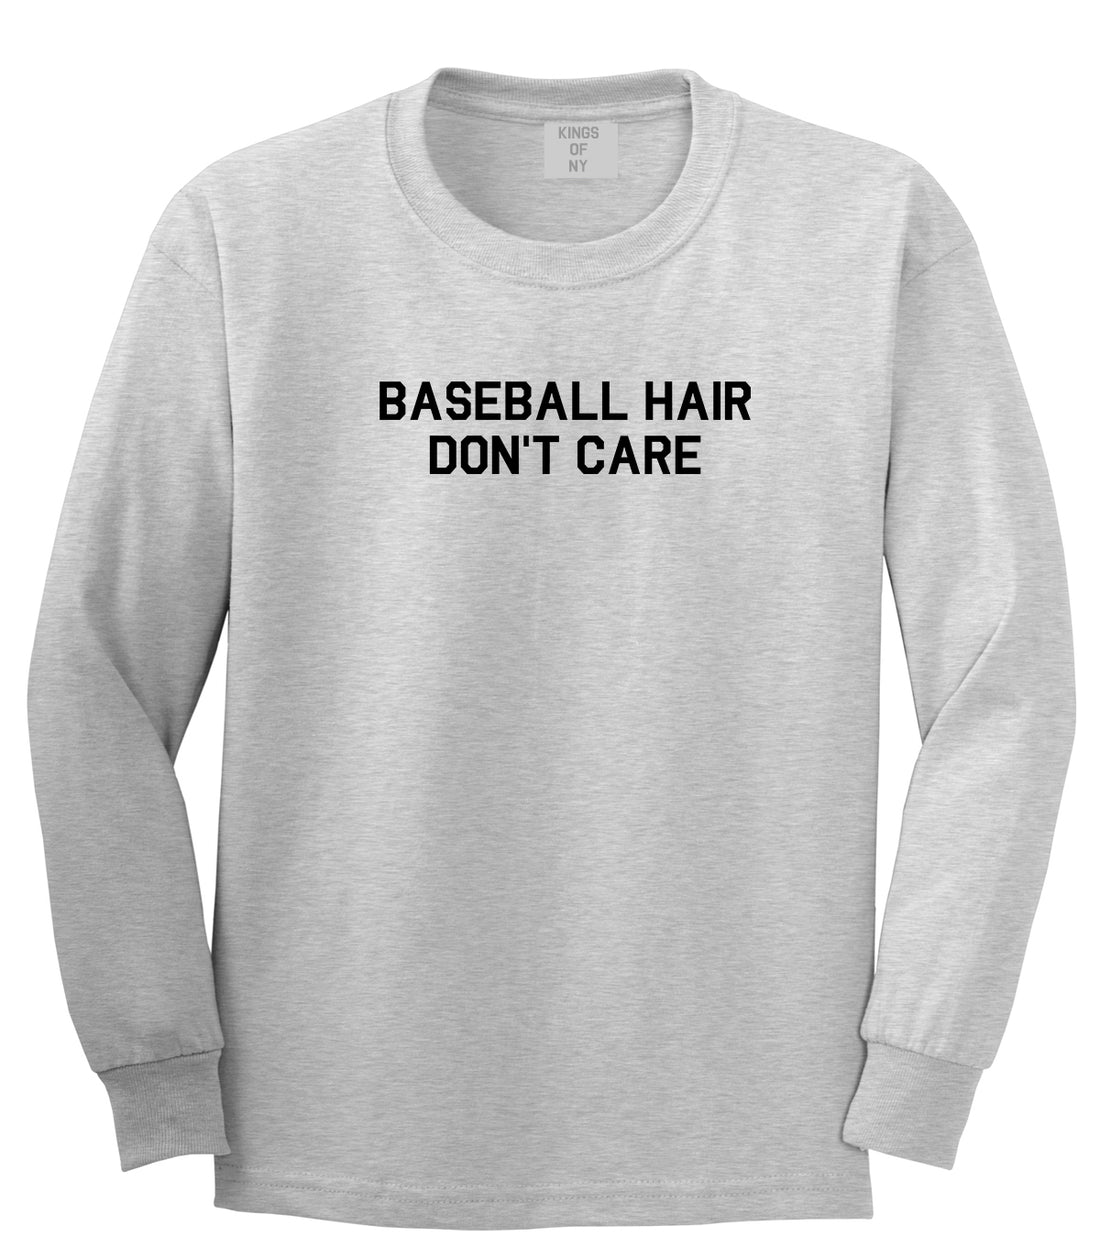 Baseball Hair Dont Care Grey Long Sleeve T-Shirt by Kings Of NY